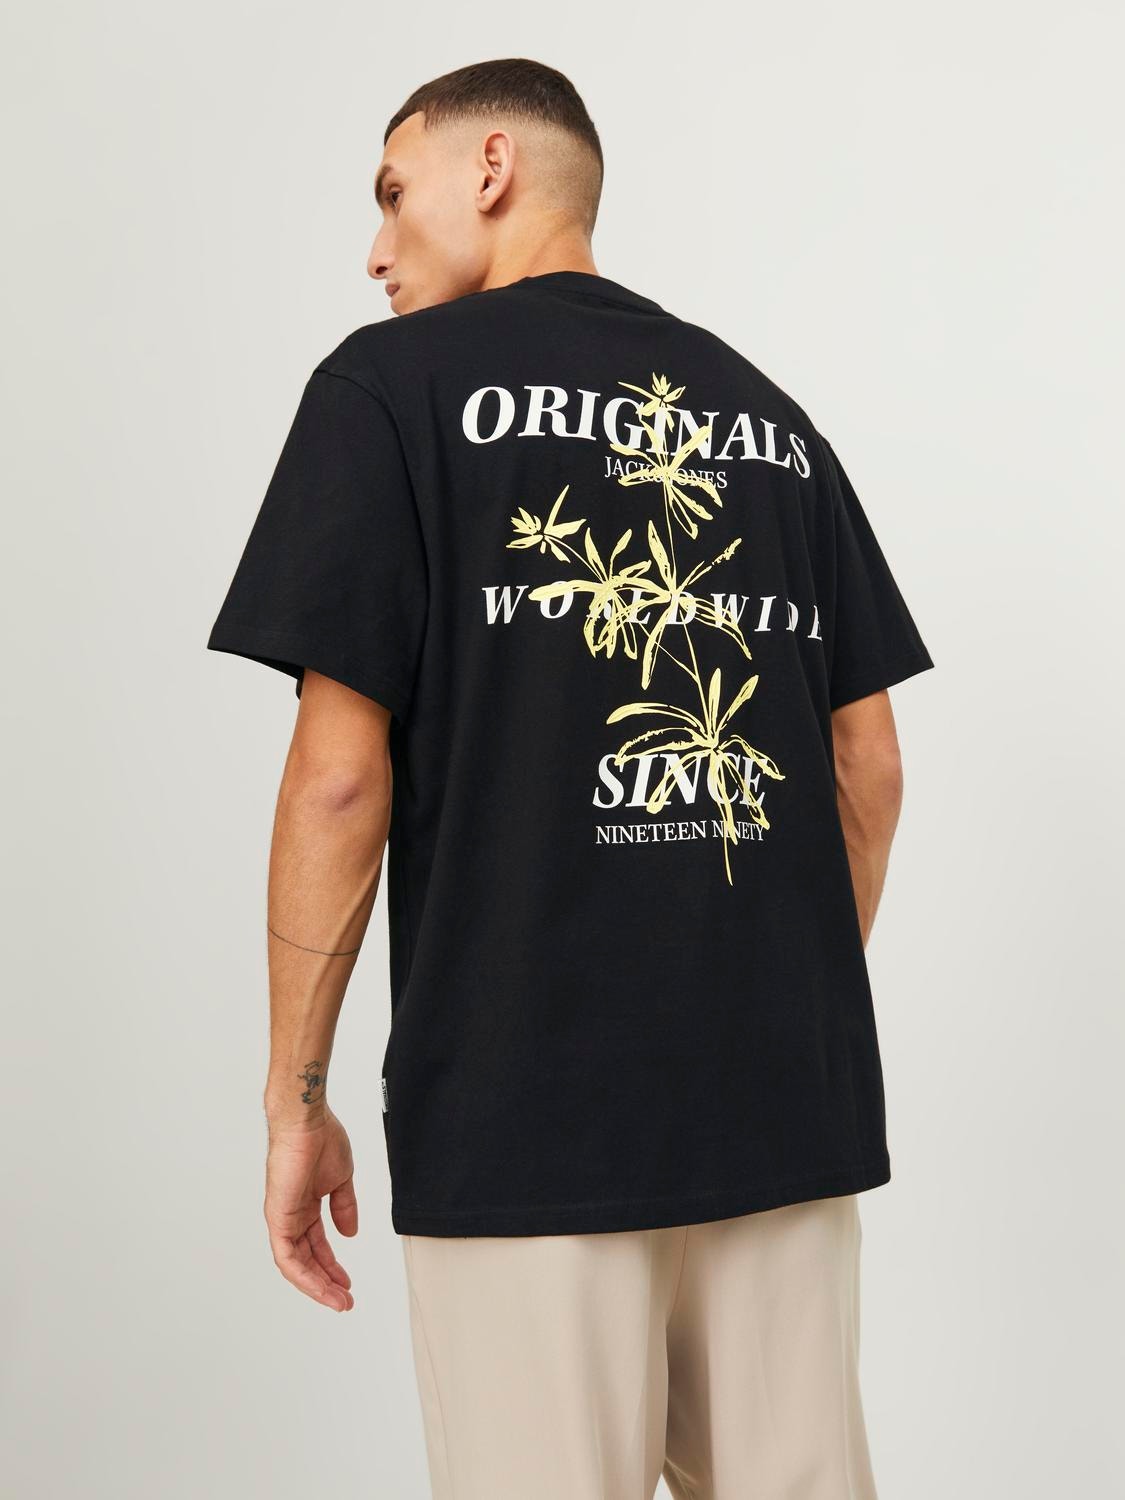 Jack & Jones Printed Crew neck T-shirt -Black - 12253602